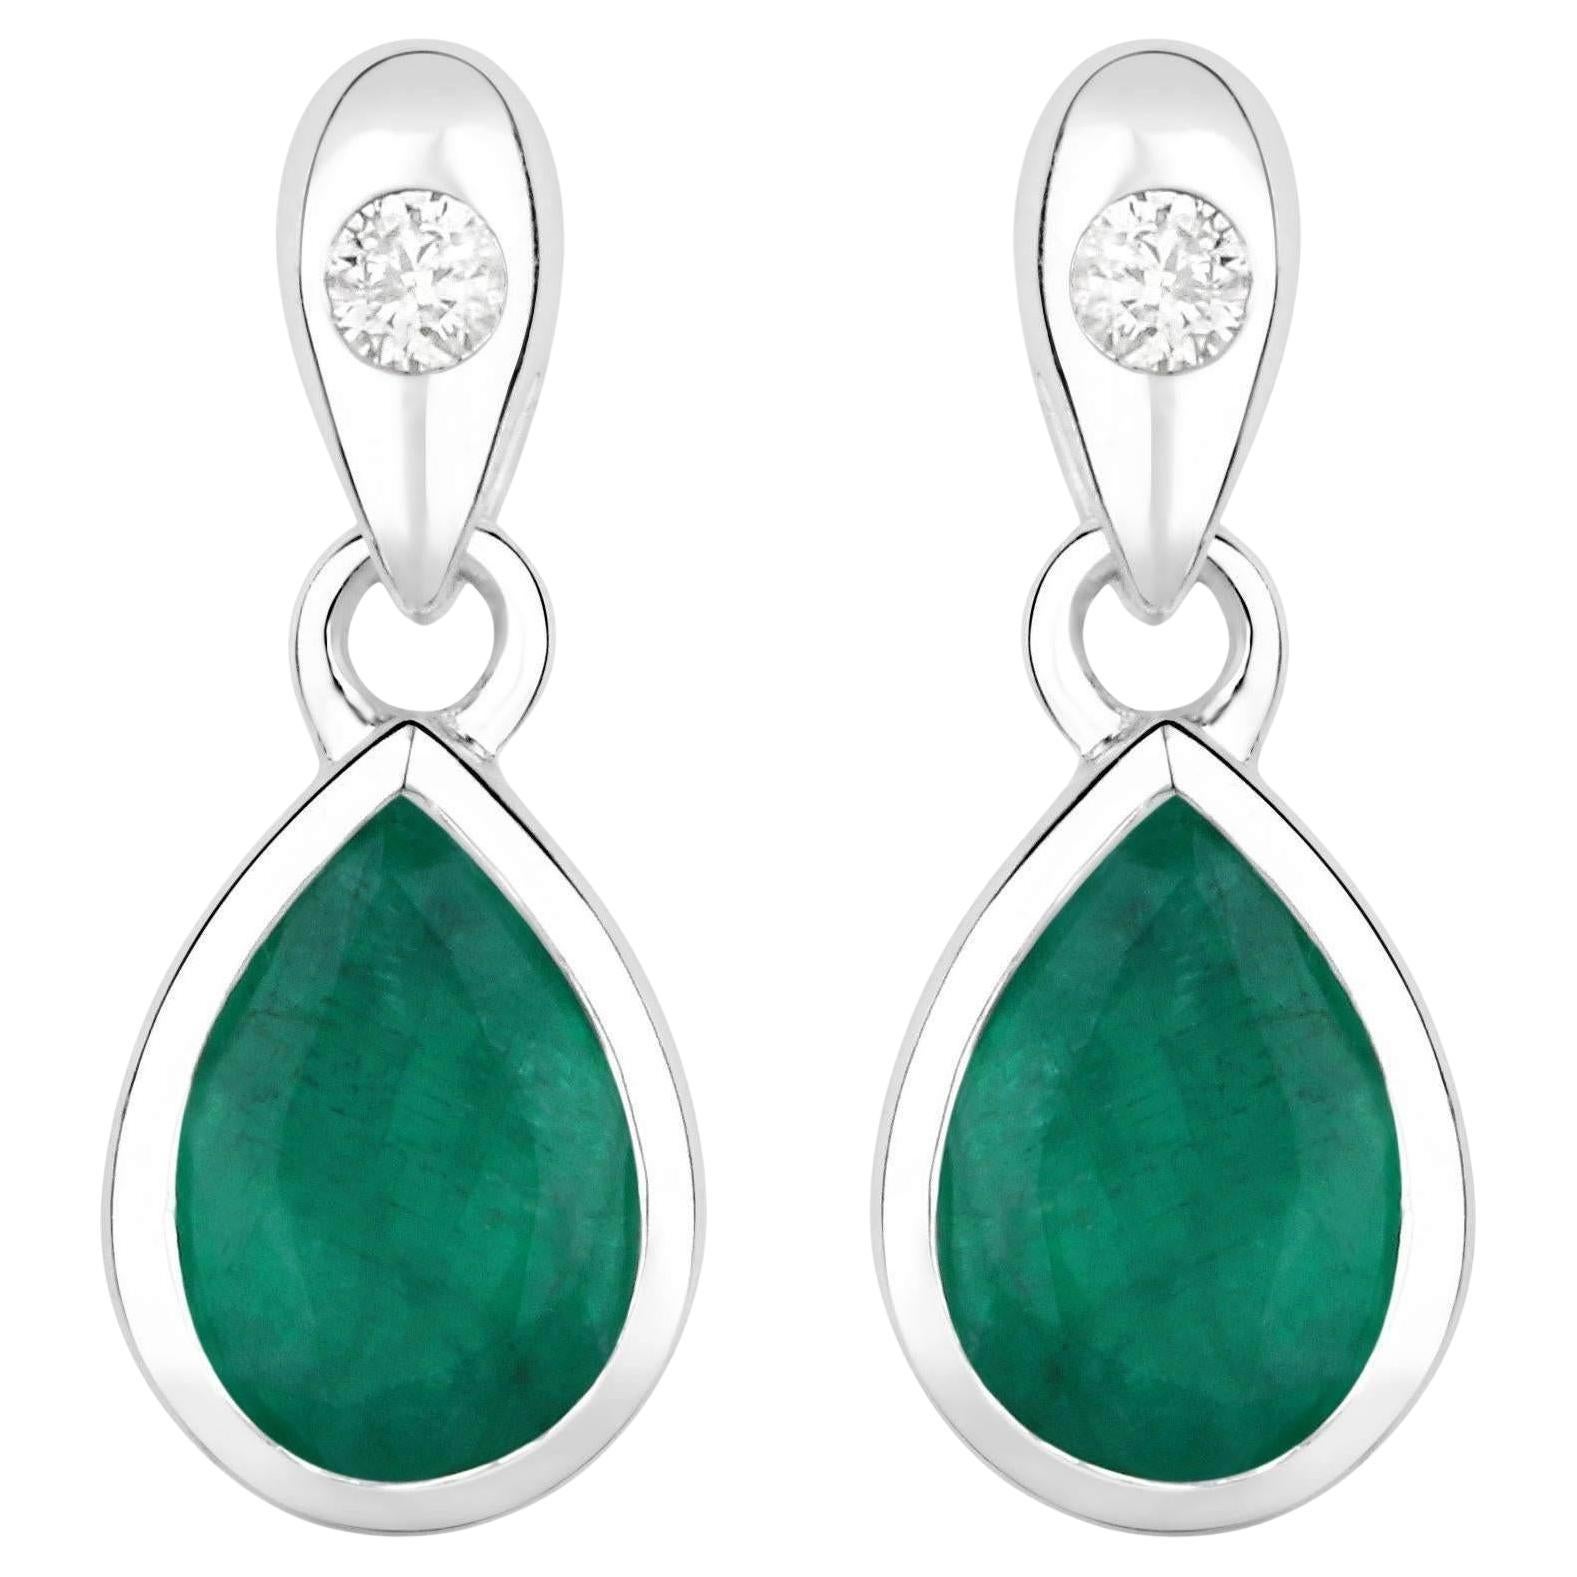 Zambian Emerald Earrings Diamonds 1.35 Carats 14K White Gold